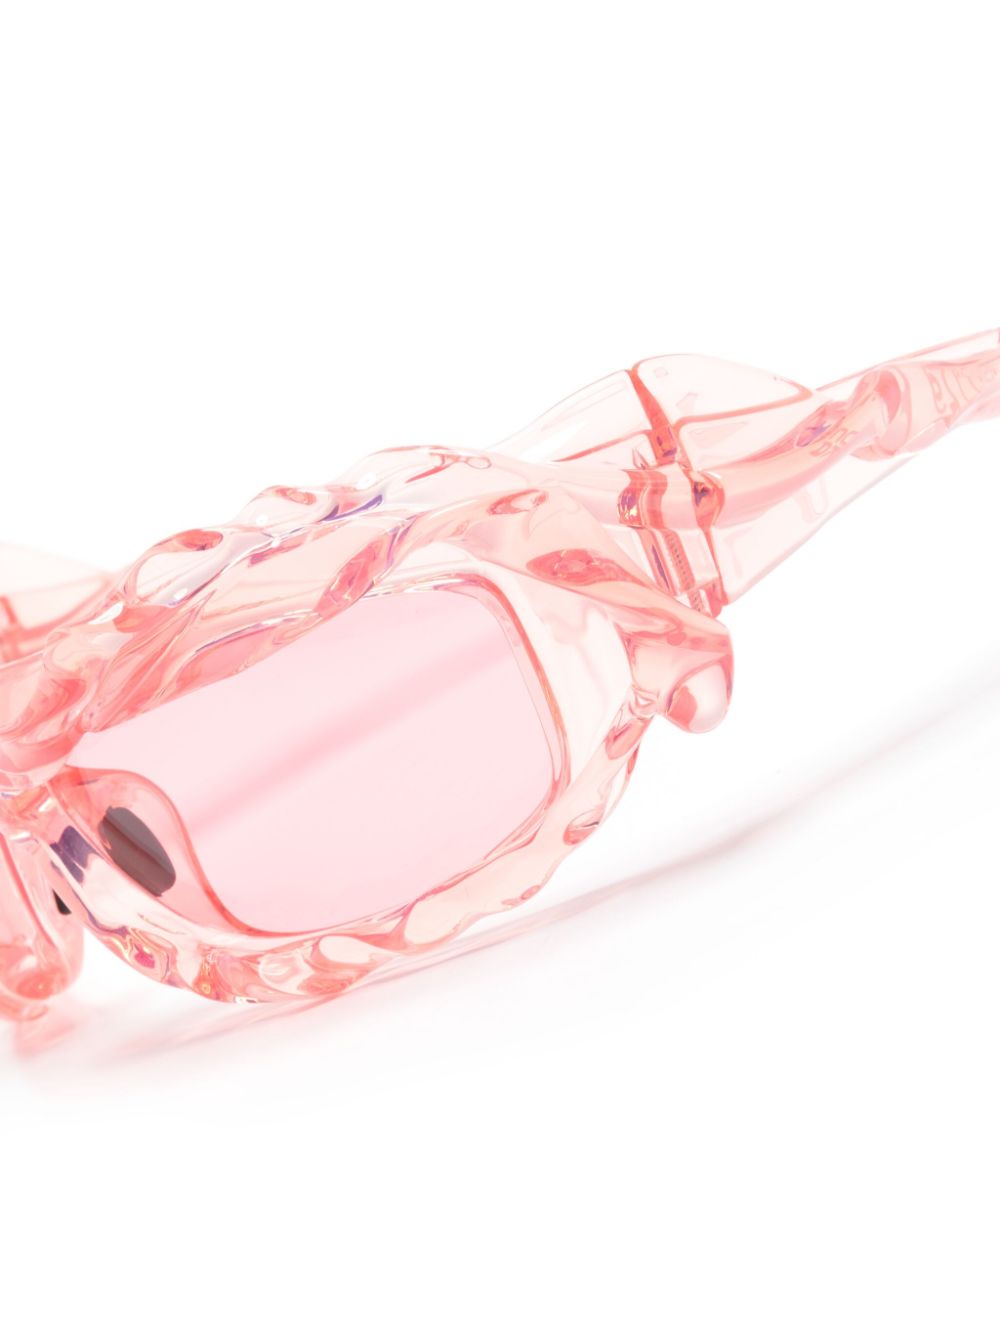 Ottolinger Sunglasses Pink